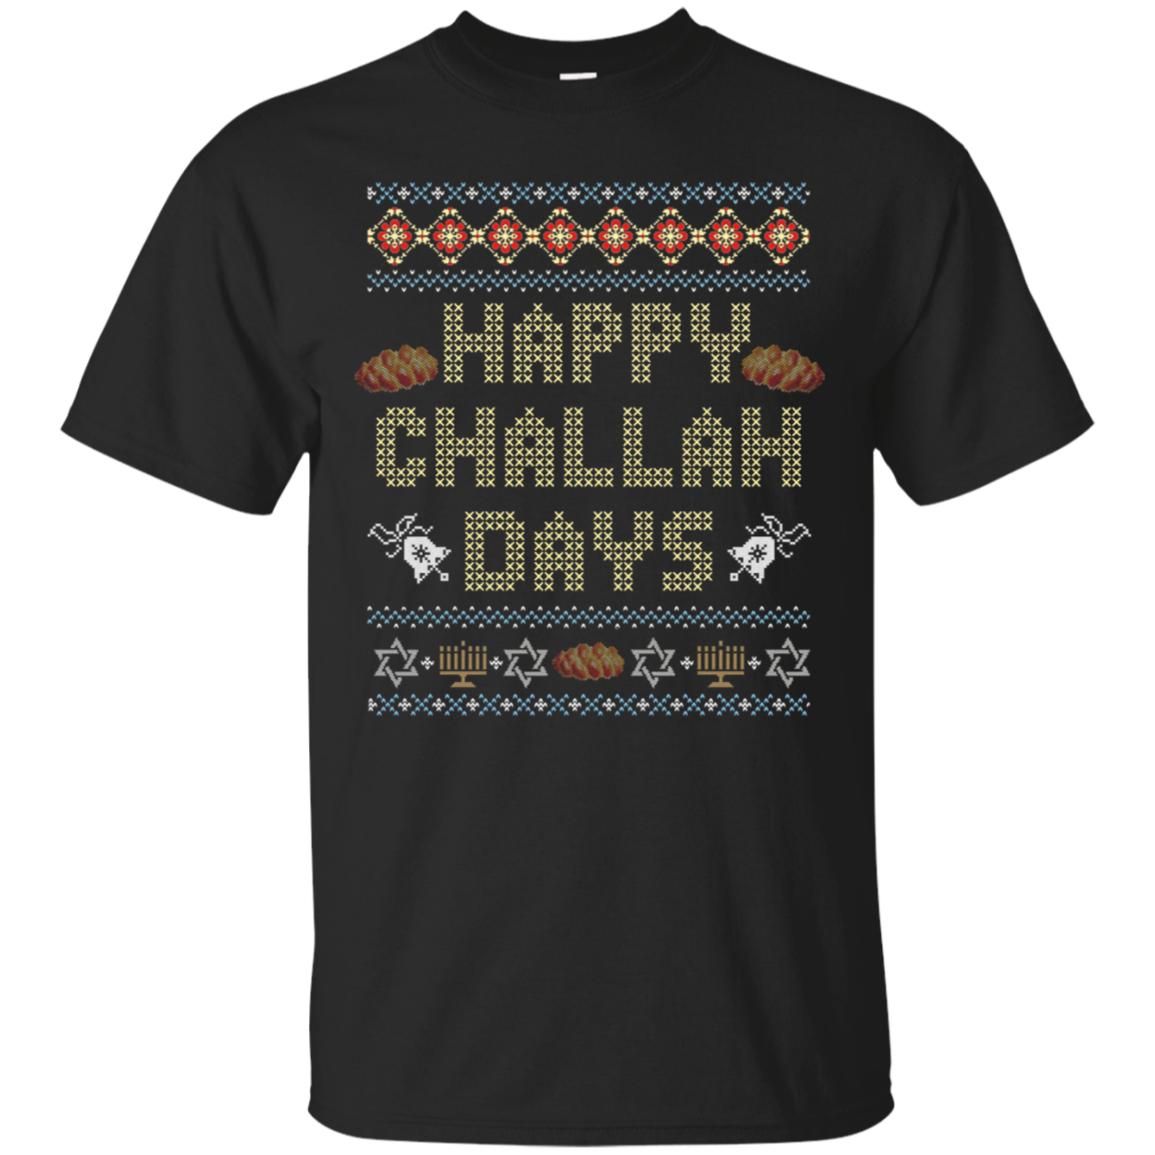 Funny Ugly Hanukkah-Happy Challah Days T-Shirt